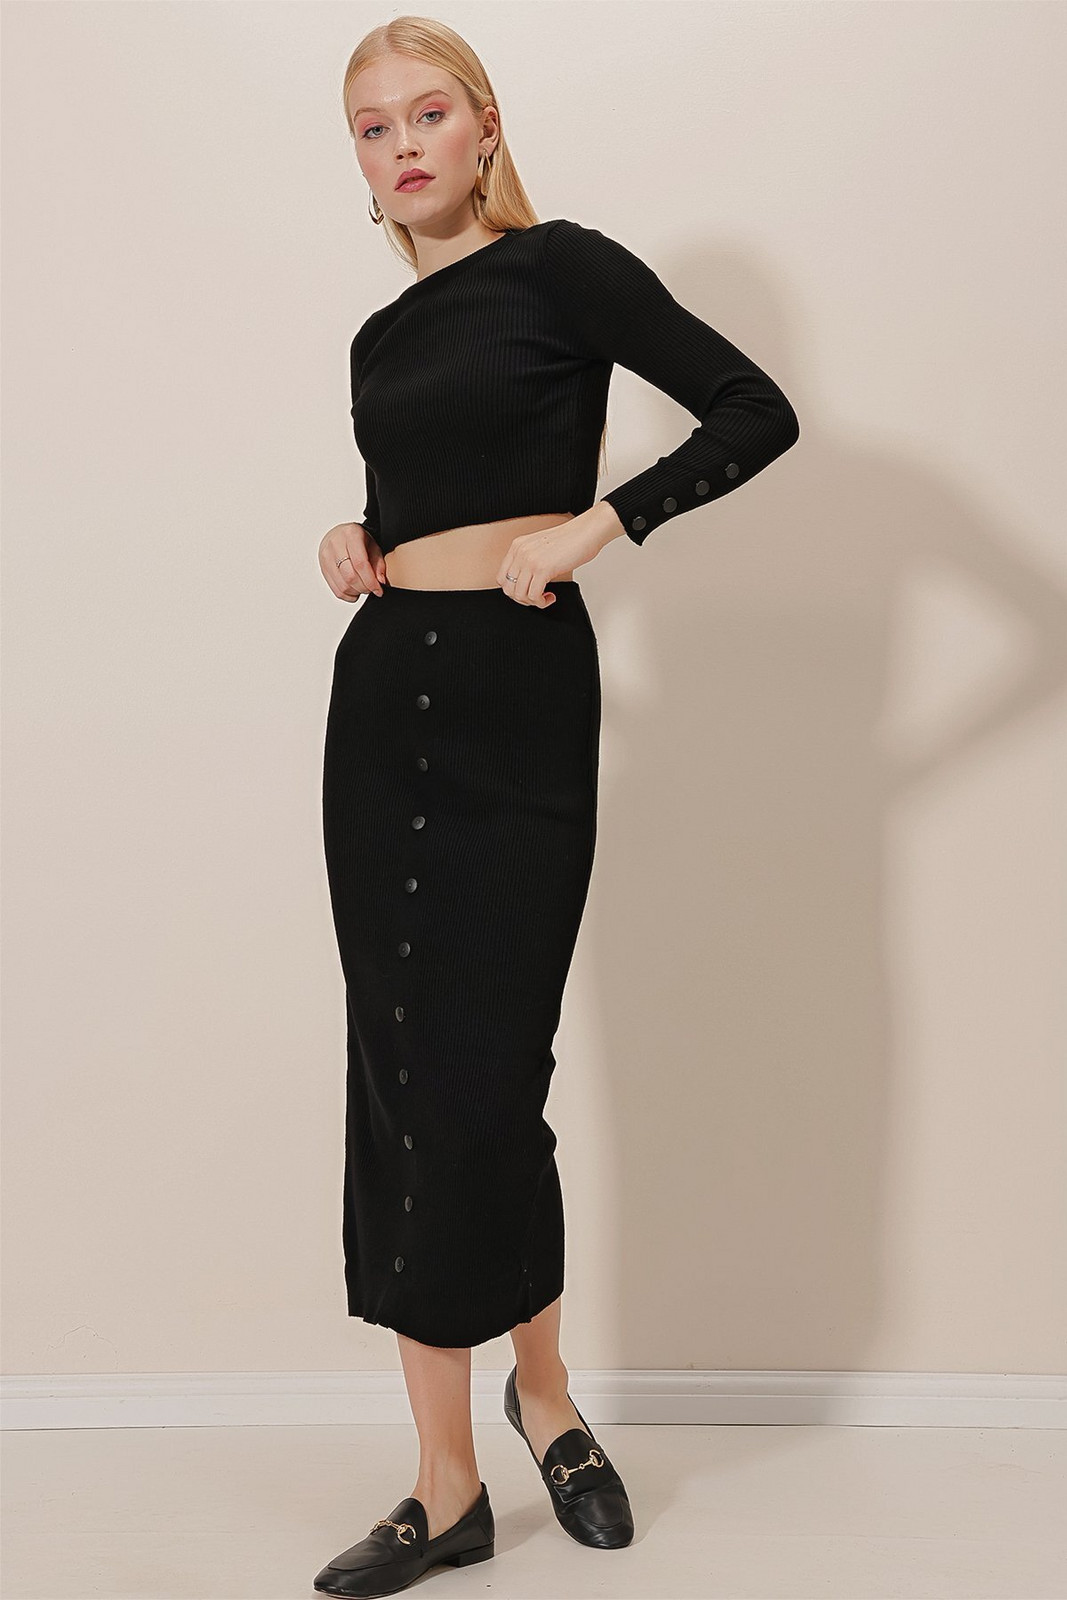 HAKKE Women's Skirt-Length Buttoned Knitwear Bottom-Top Set